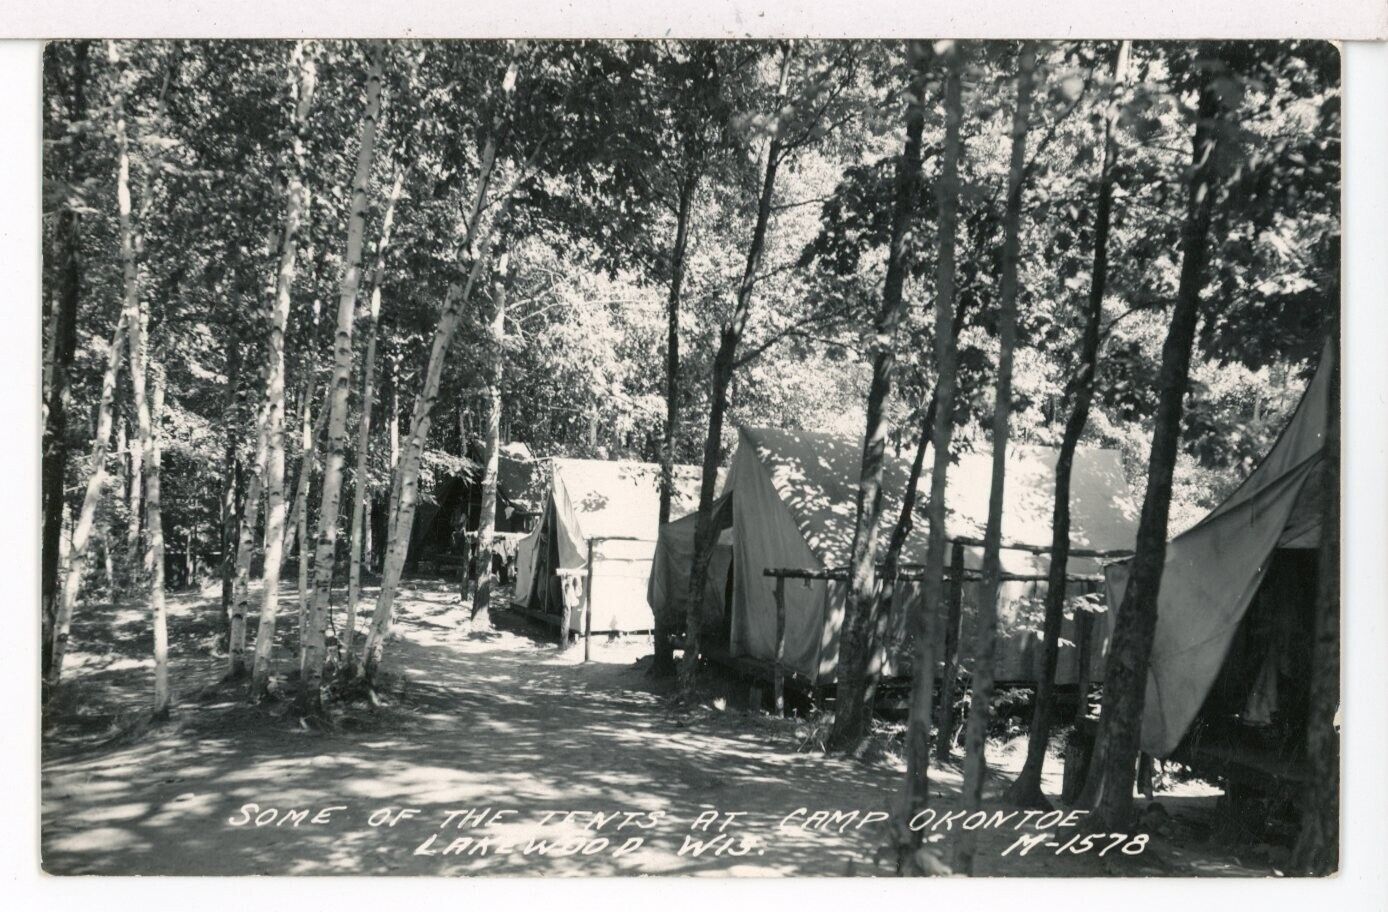 1953 - RPPC - Tentline at CAMP OKONTOE, Lakewood, Wisconsin, Postcard